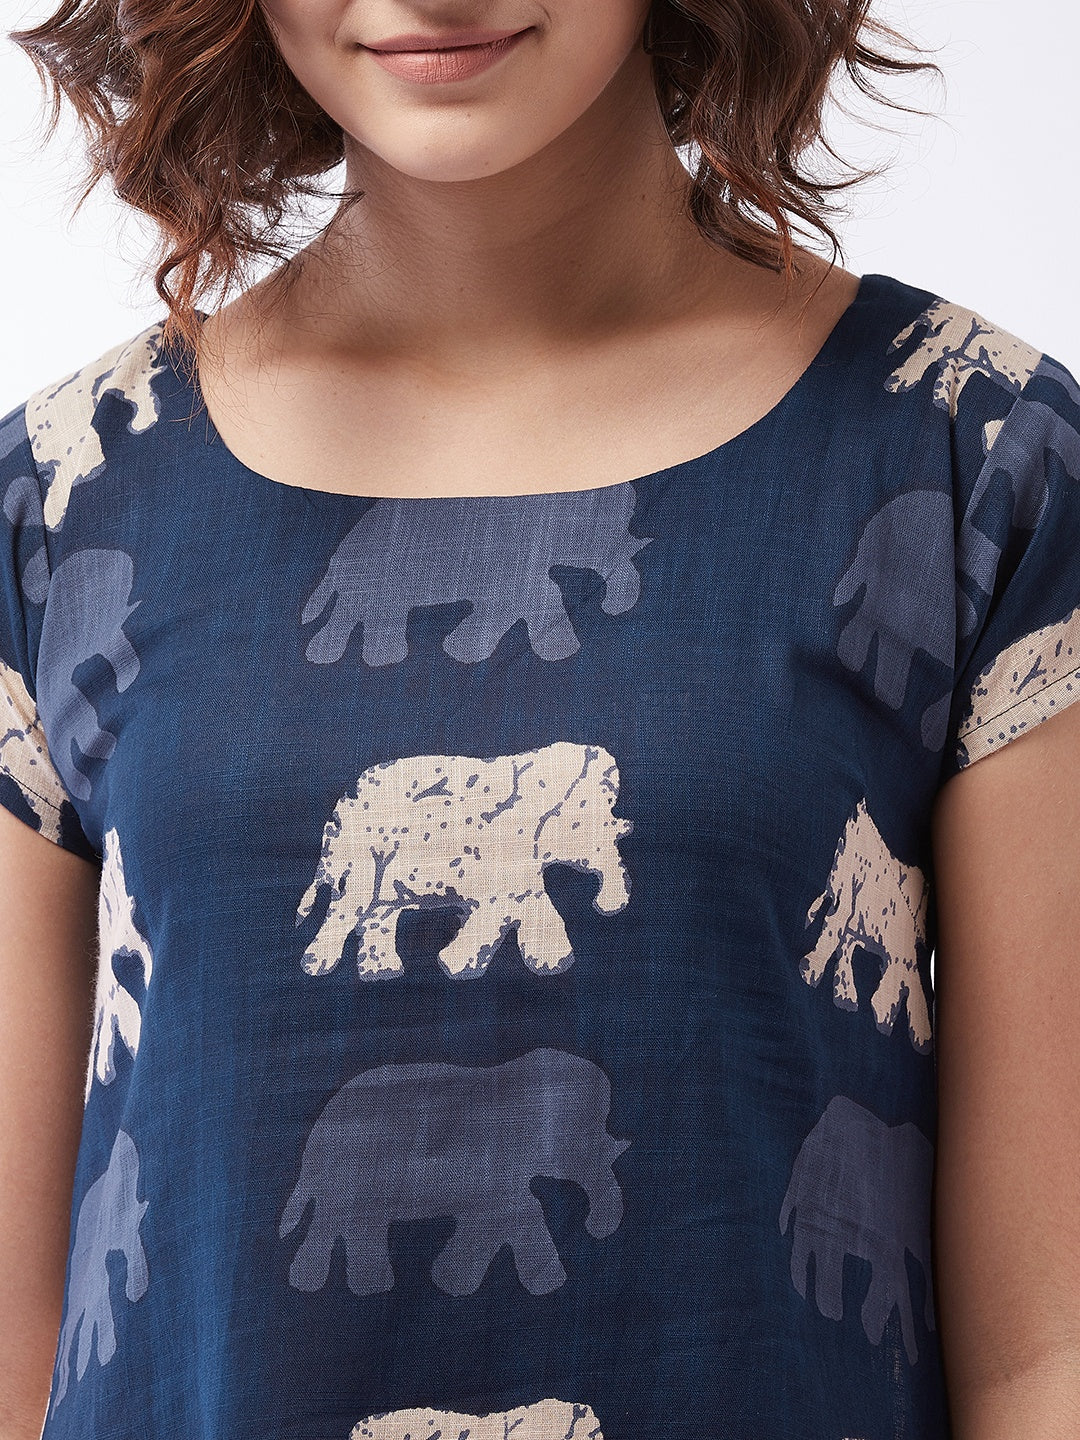 Blue Elephant Dress For Teens